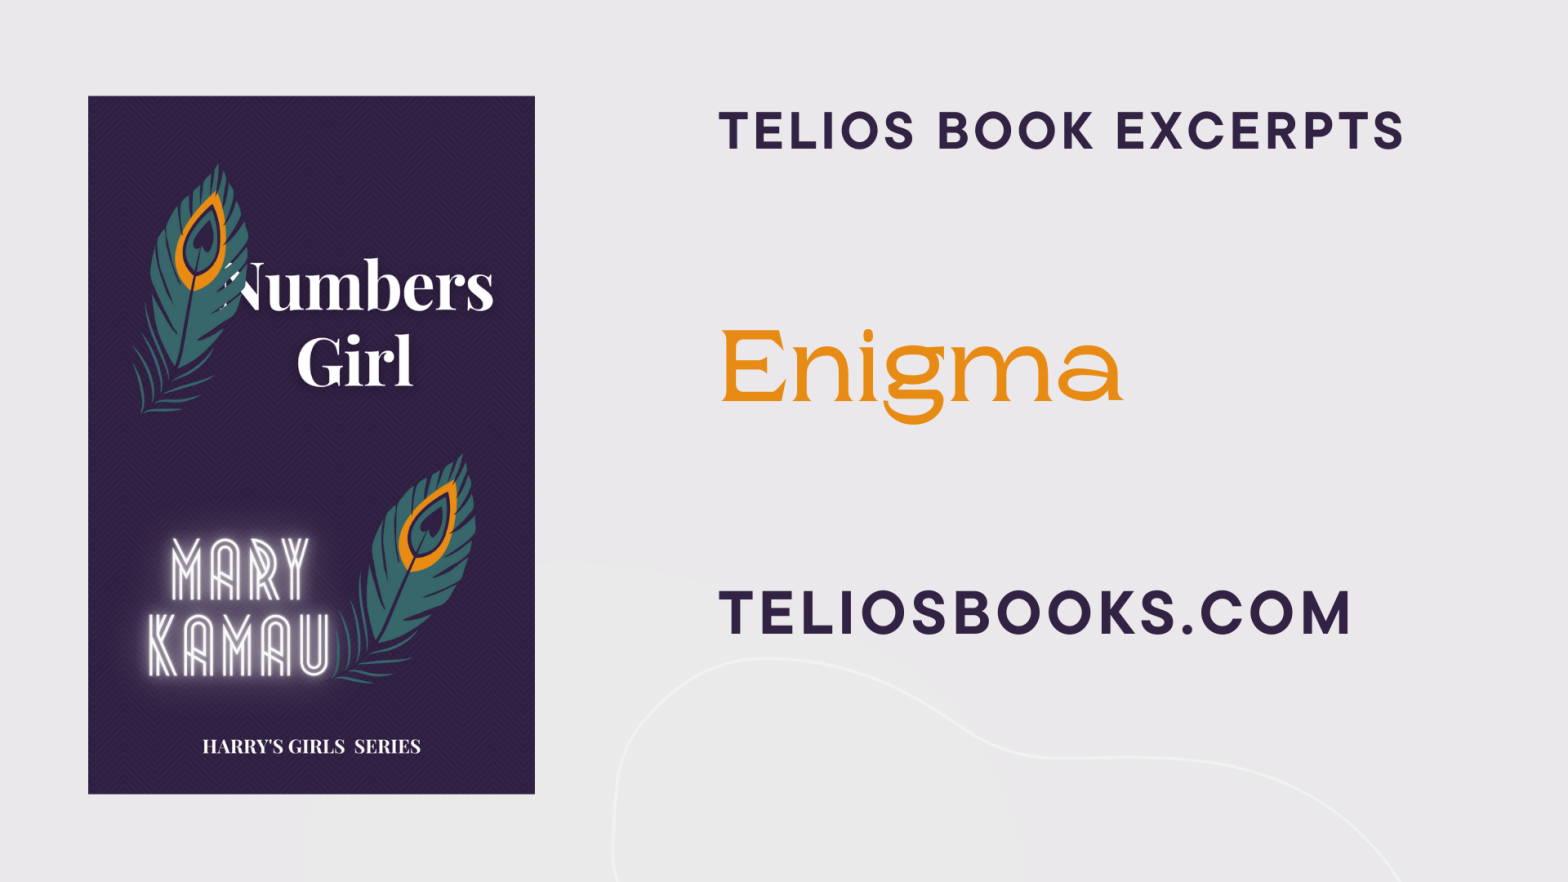 Enigma | Numbers Girl By Mary Kamau | Kenyan Books